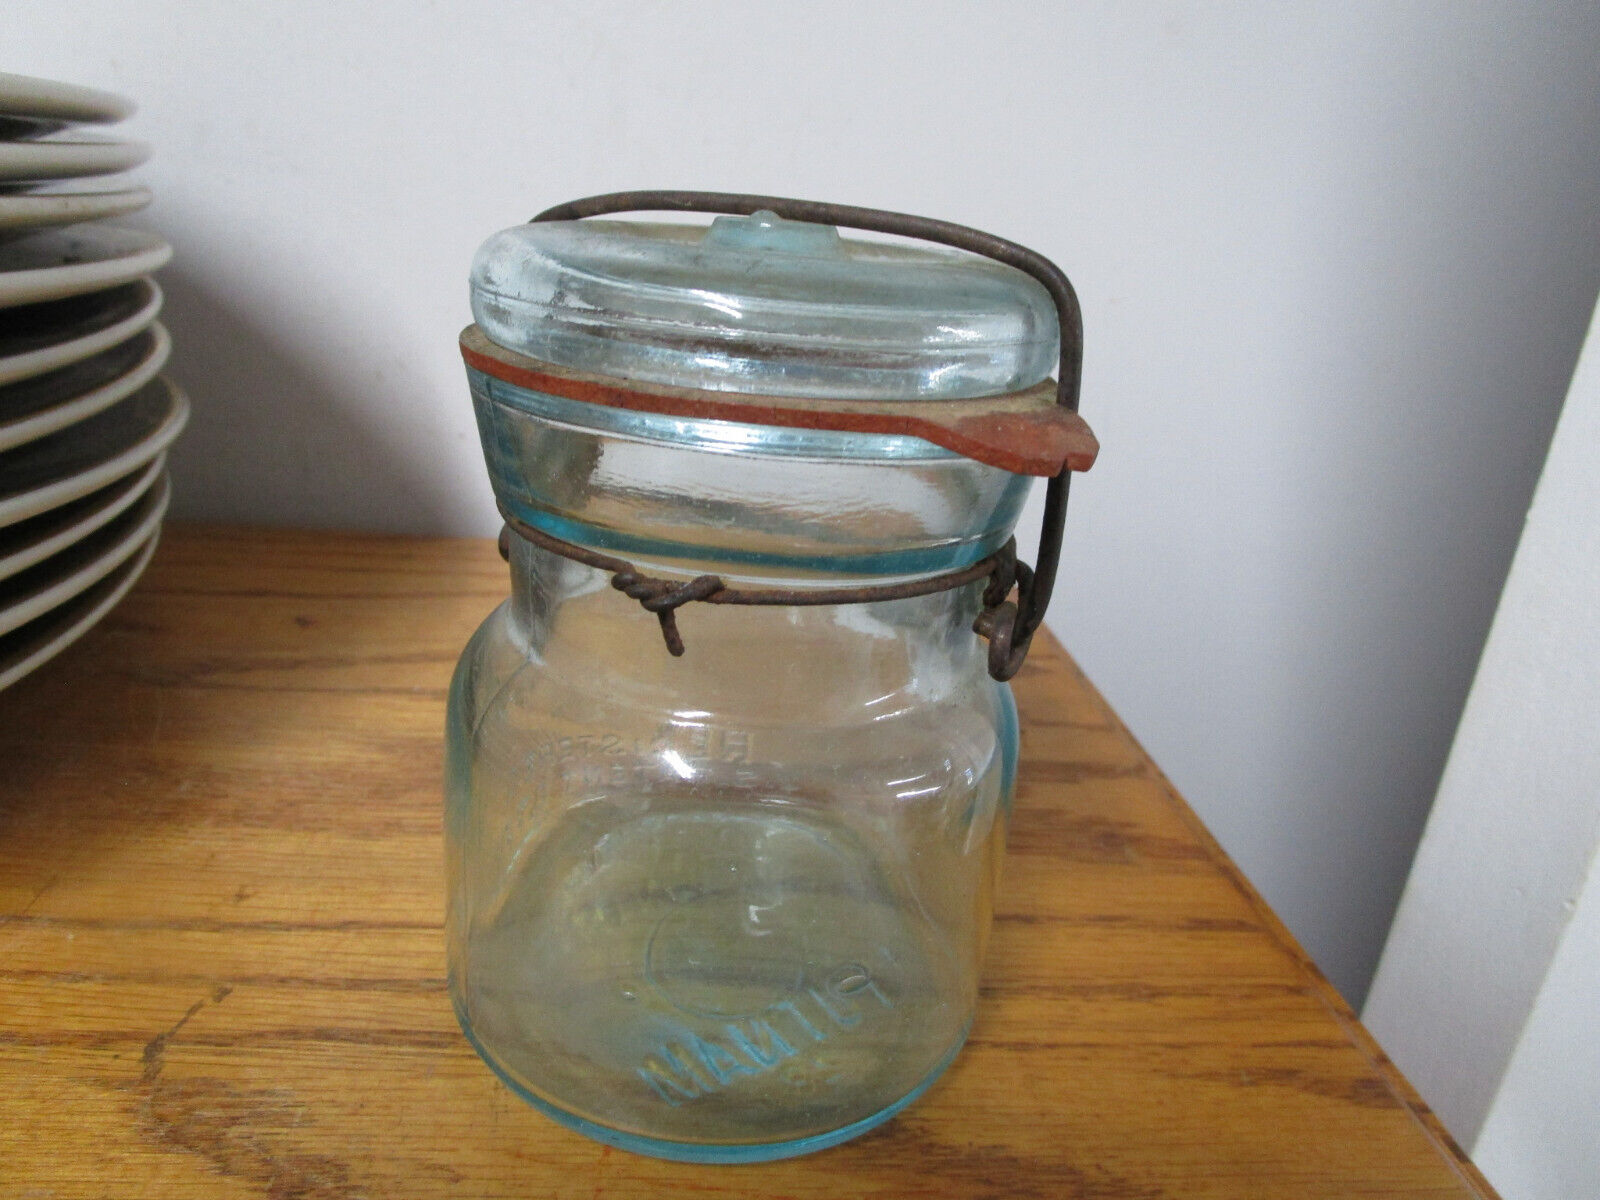 Lightning Putnam Antique Aqua Jar Trade Mark Wire Bail Latch Glass Lid Marked 28